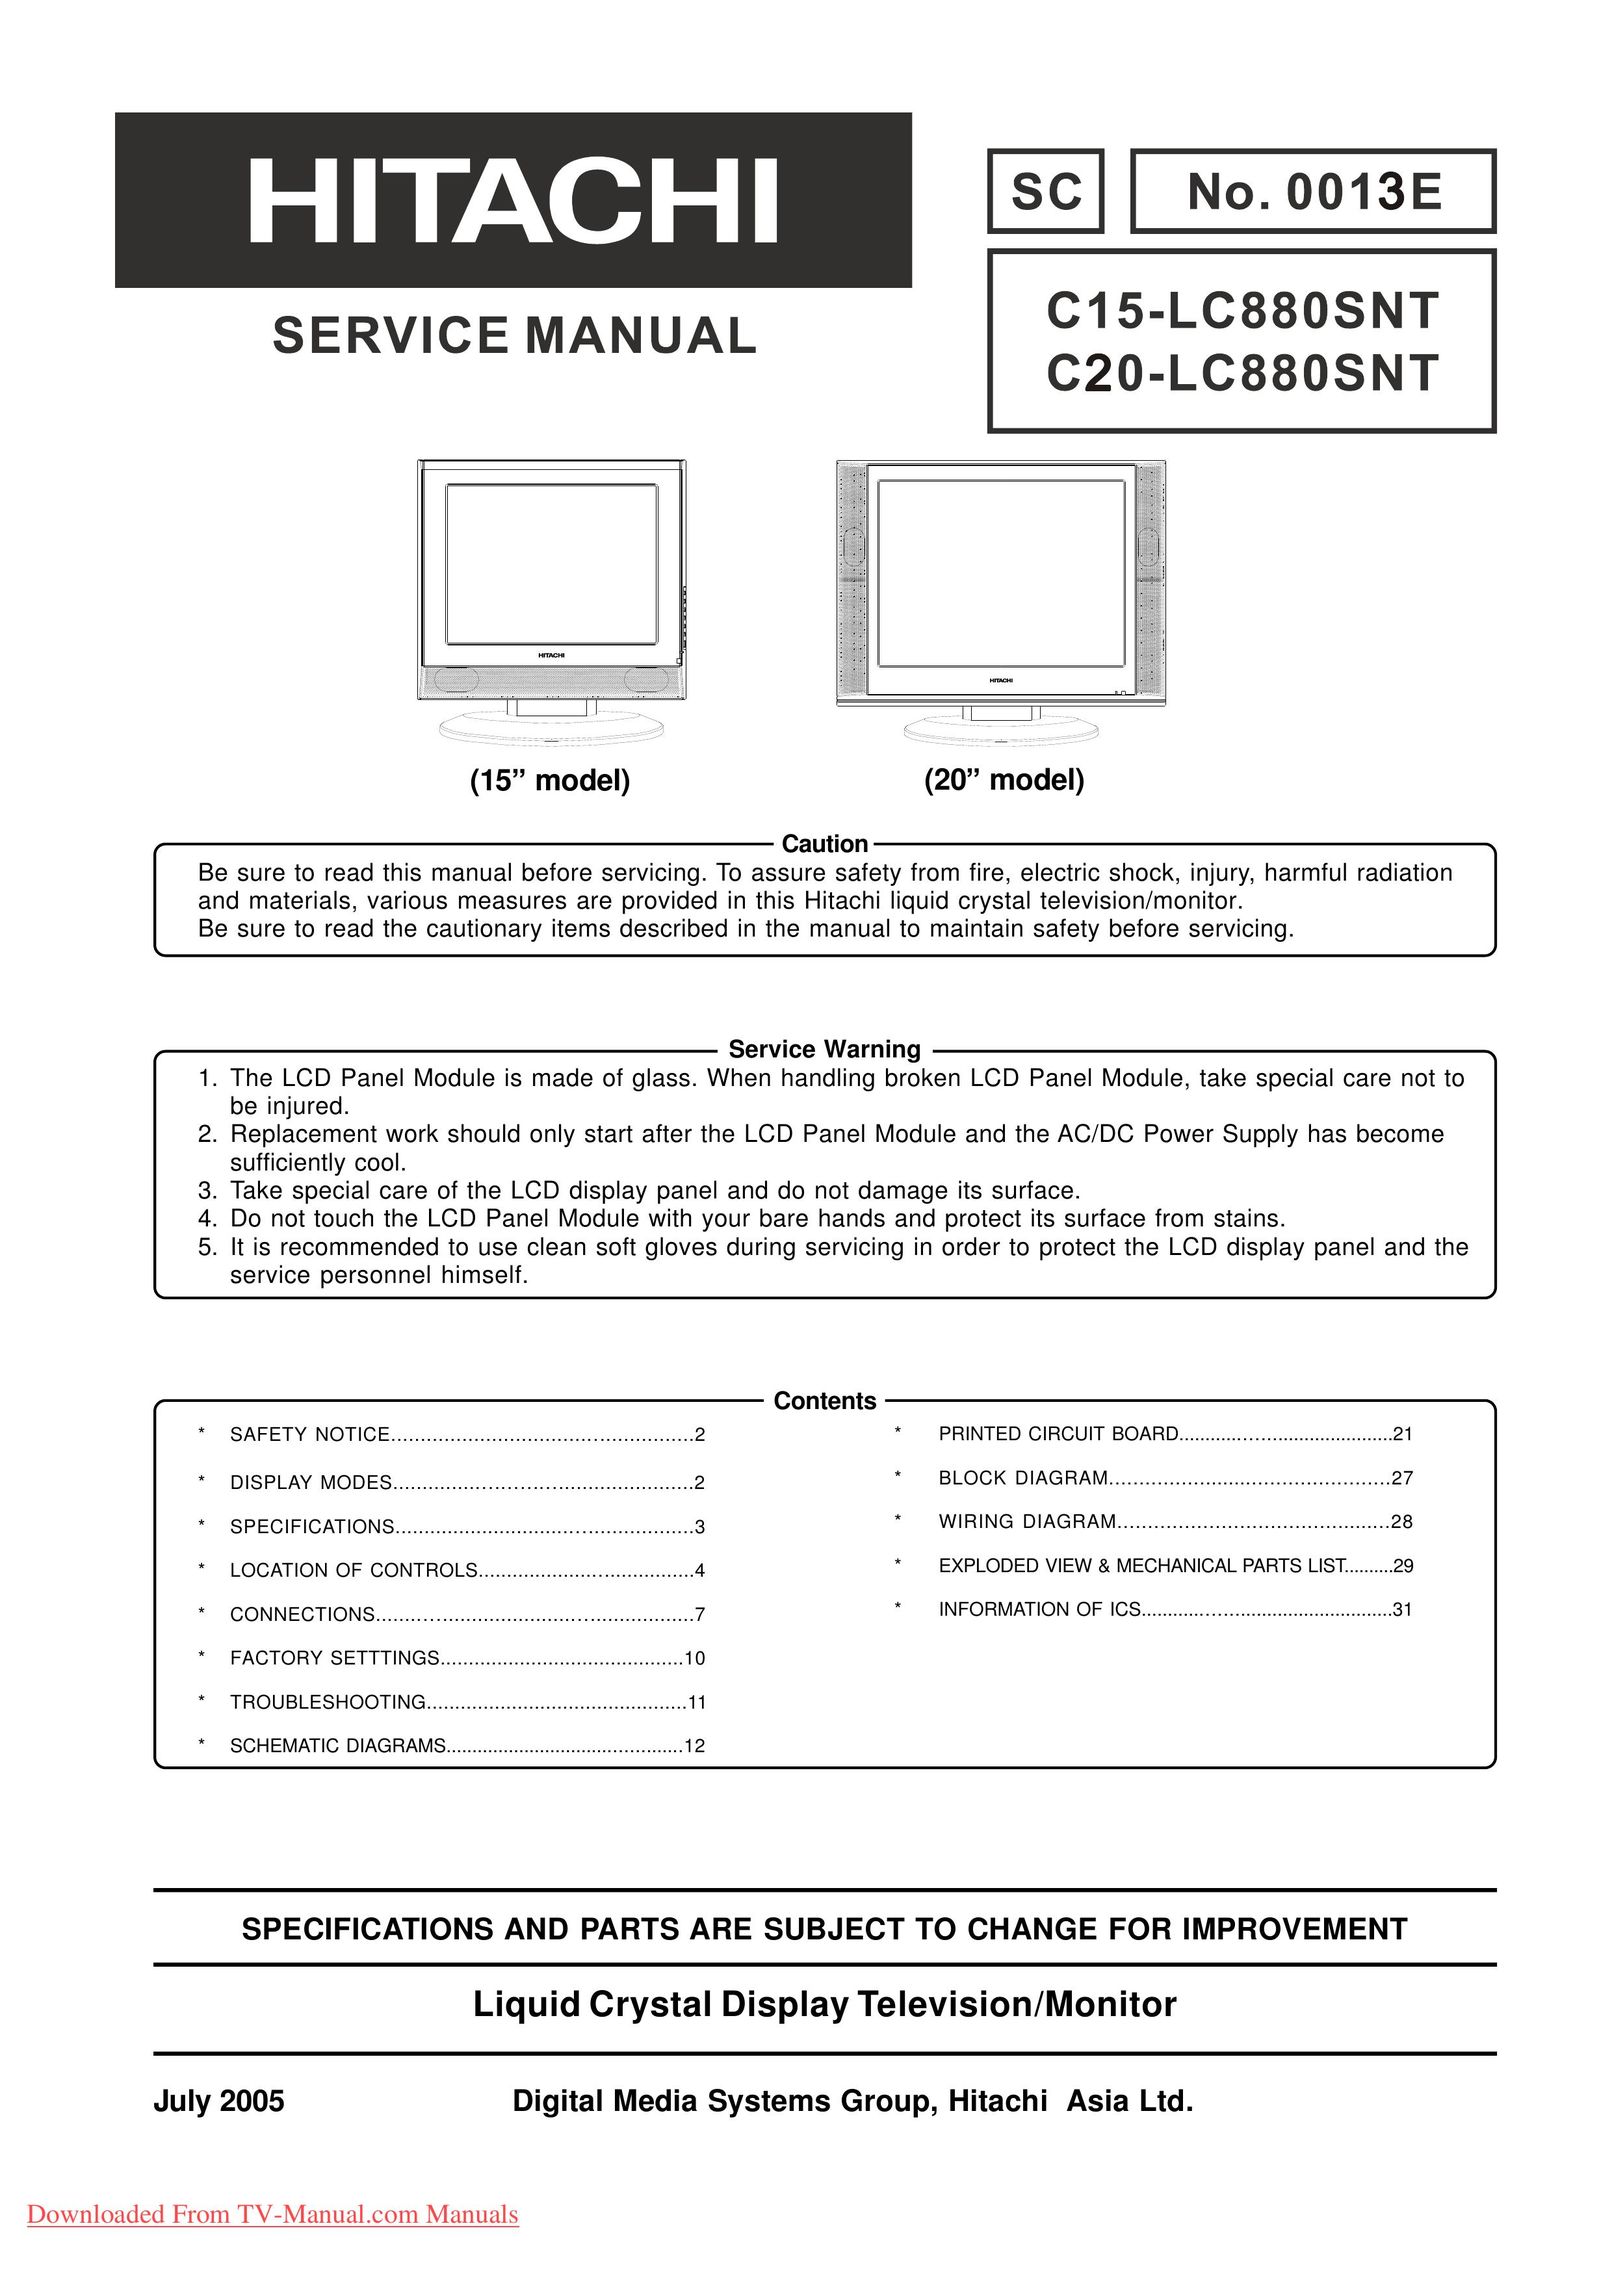 Hitachi C15-LC880SNT Model Vehicle User Manual